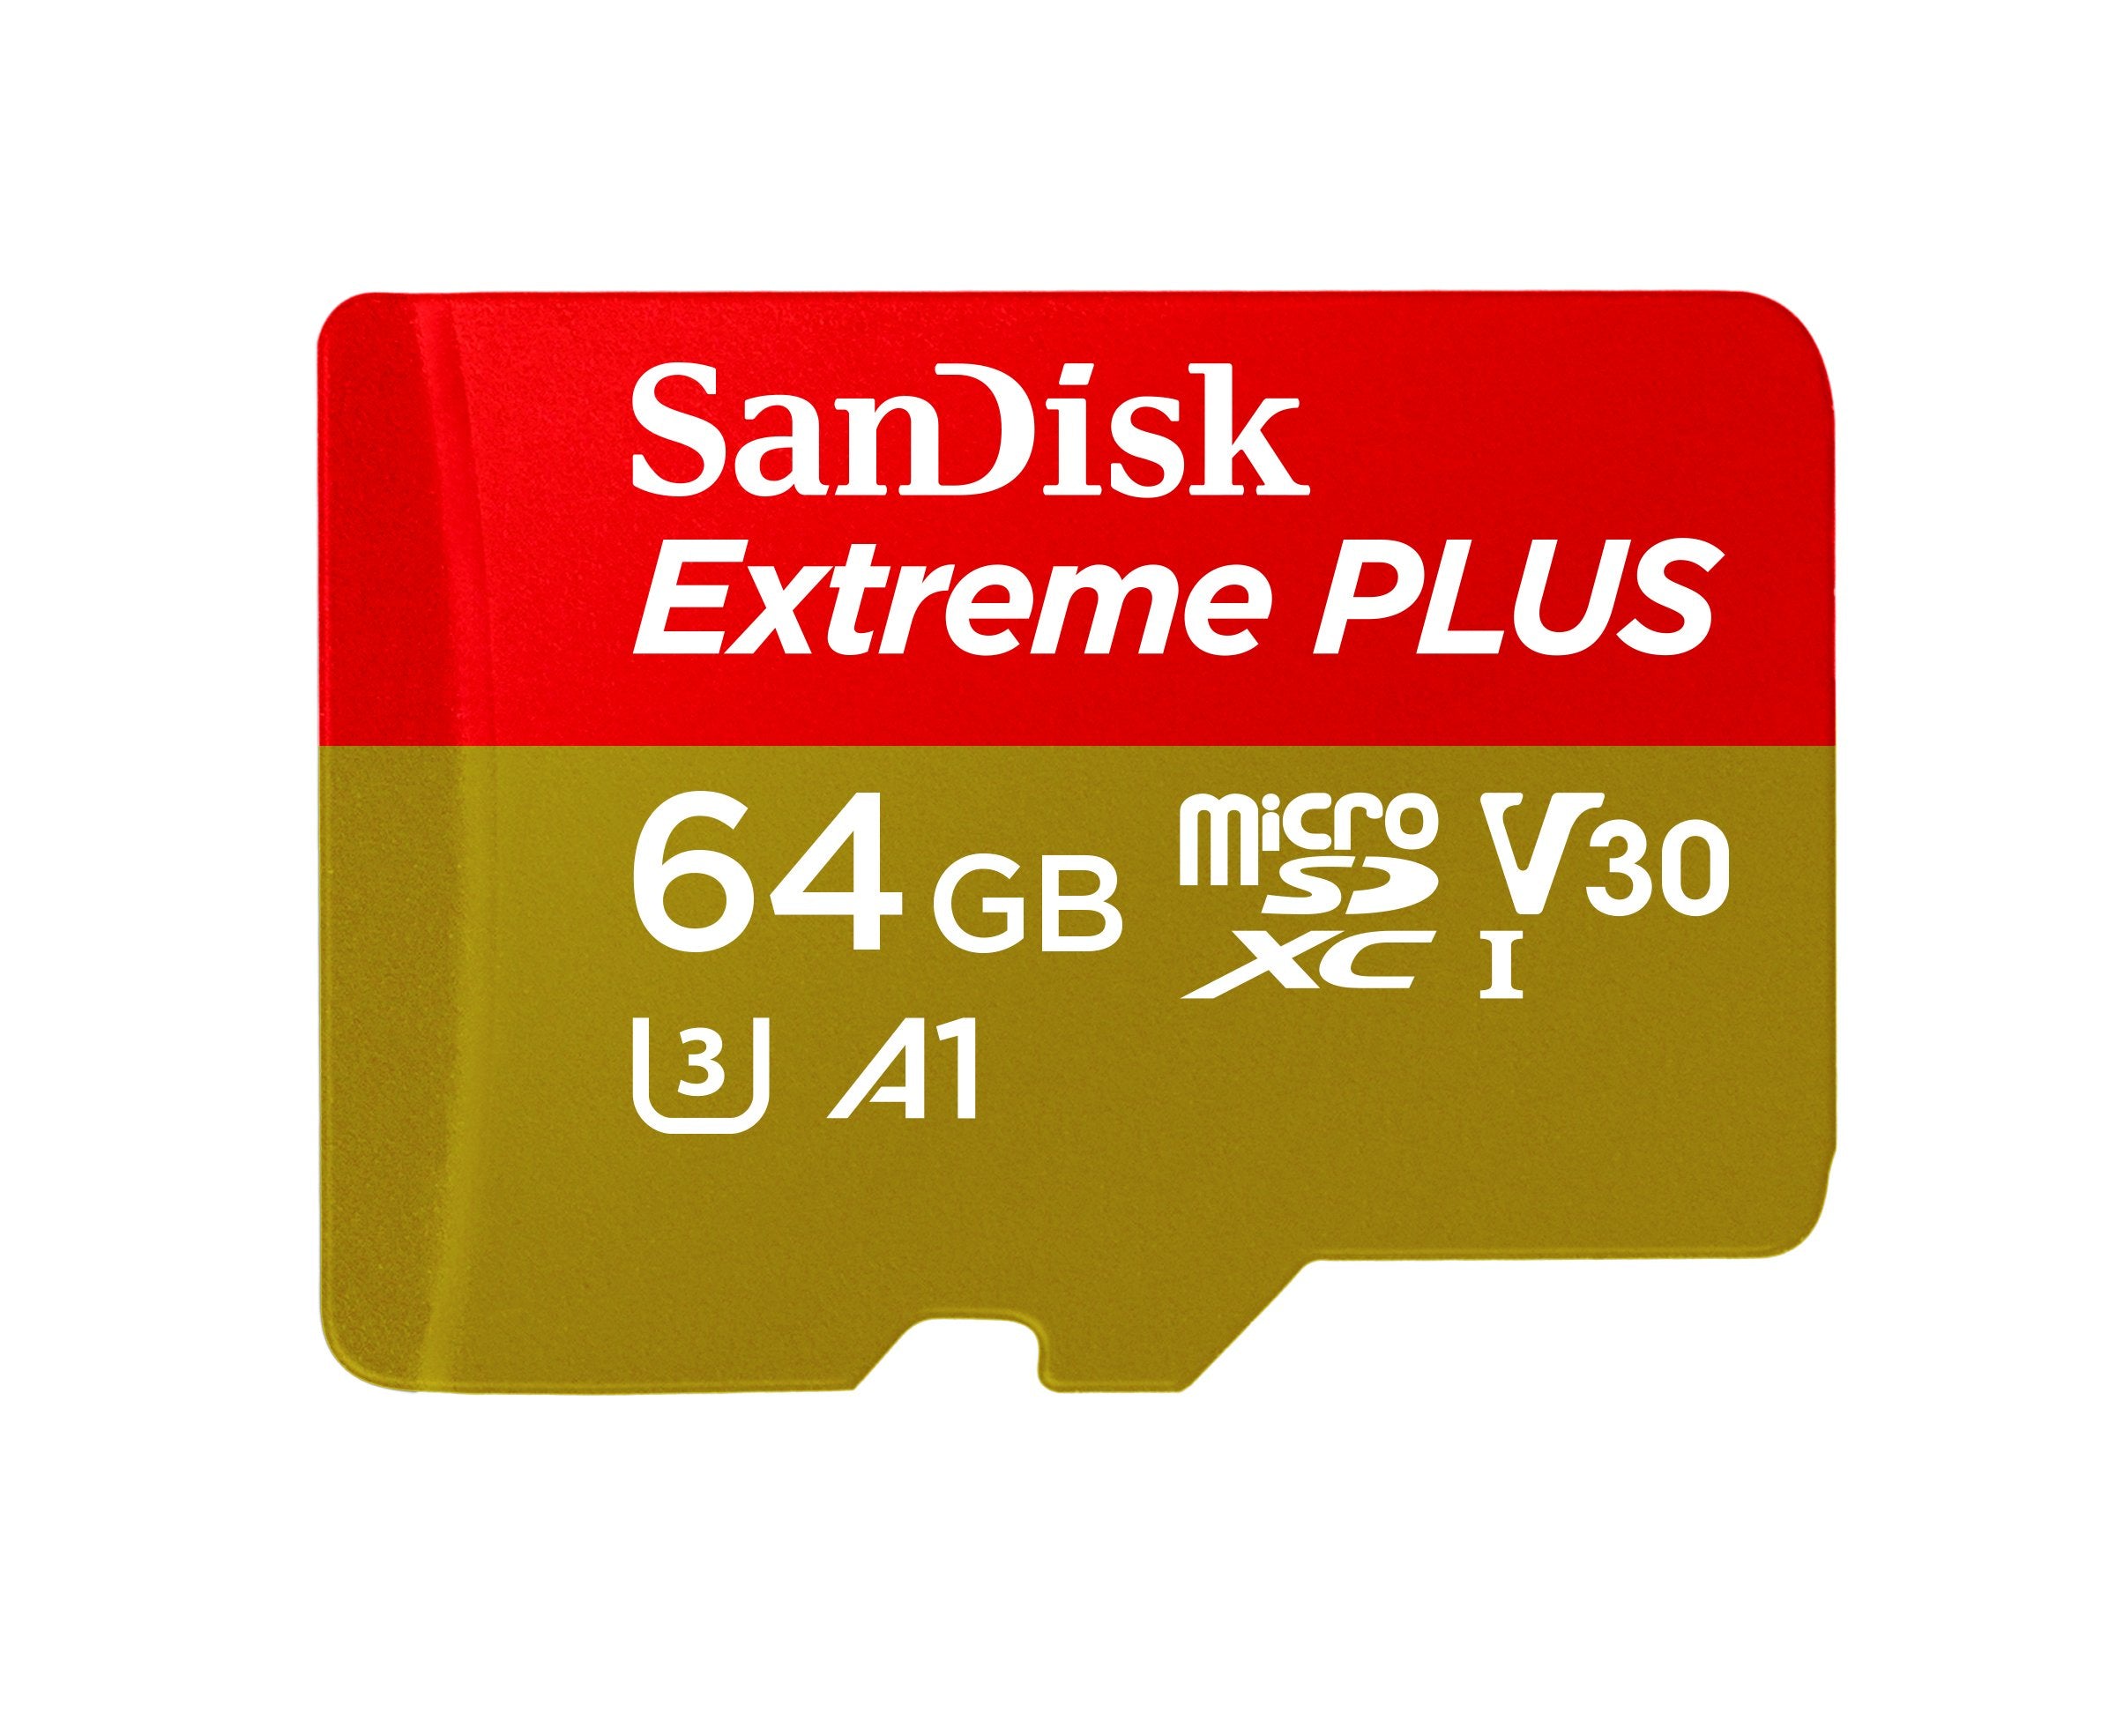 SanDisk Extreme PLUS 64GB microSDXC UHS-I Card - SDSQXBG-064G-GN6MA